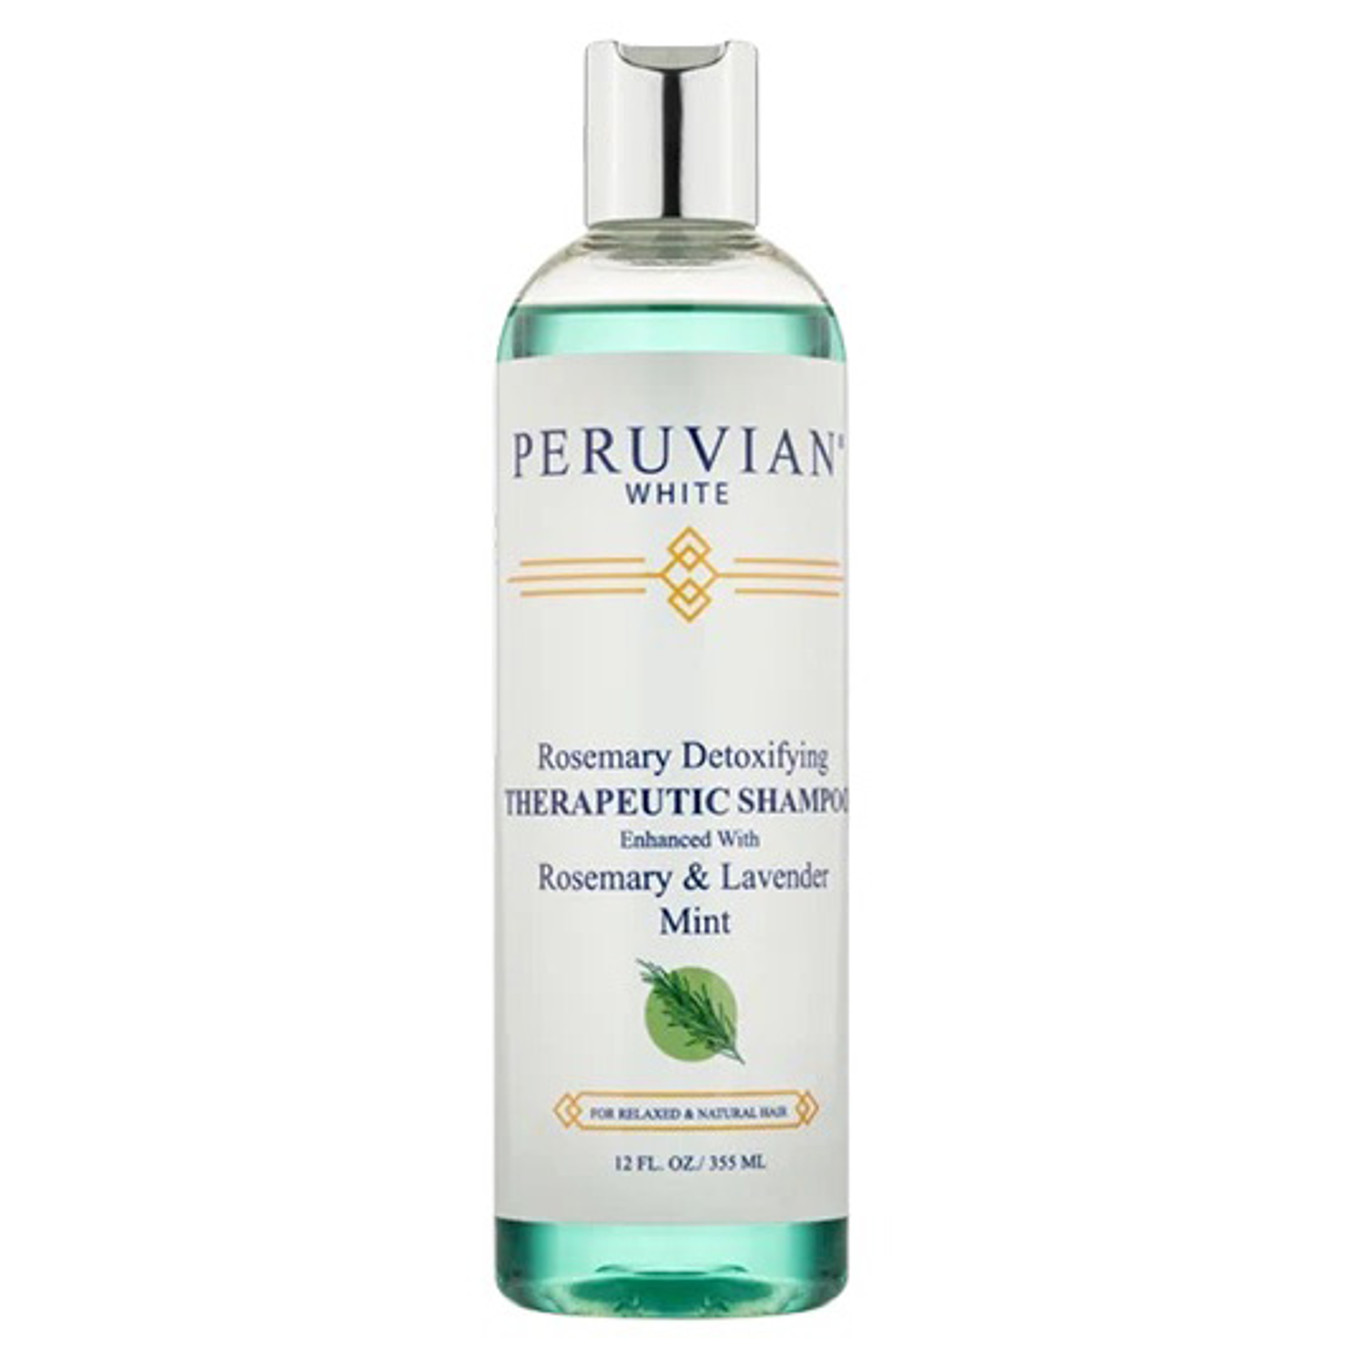 Peruvian White Rosemary & Lavender Mint Detoxifying Therapeutic Shampoo